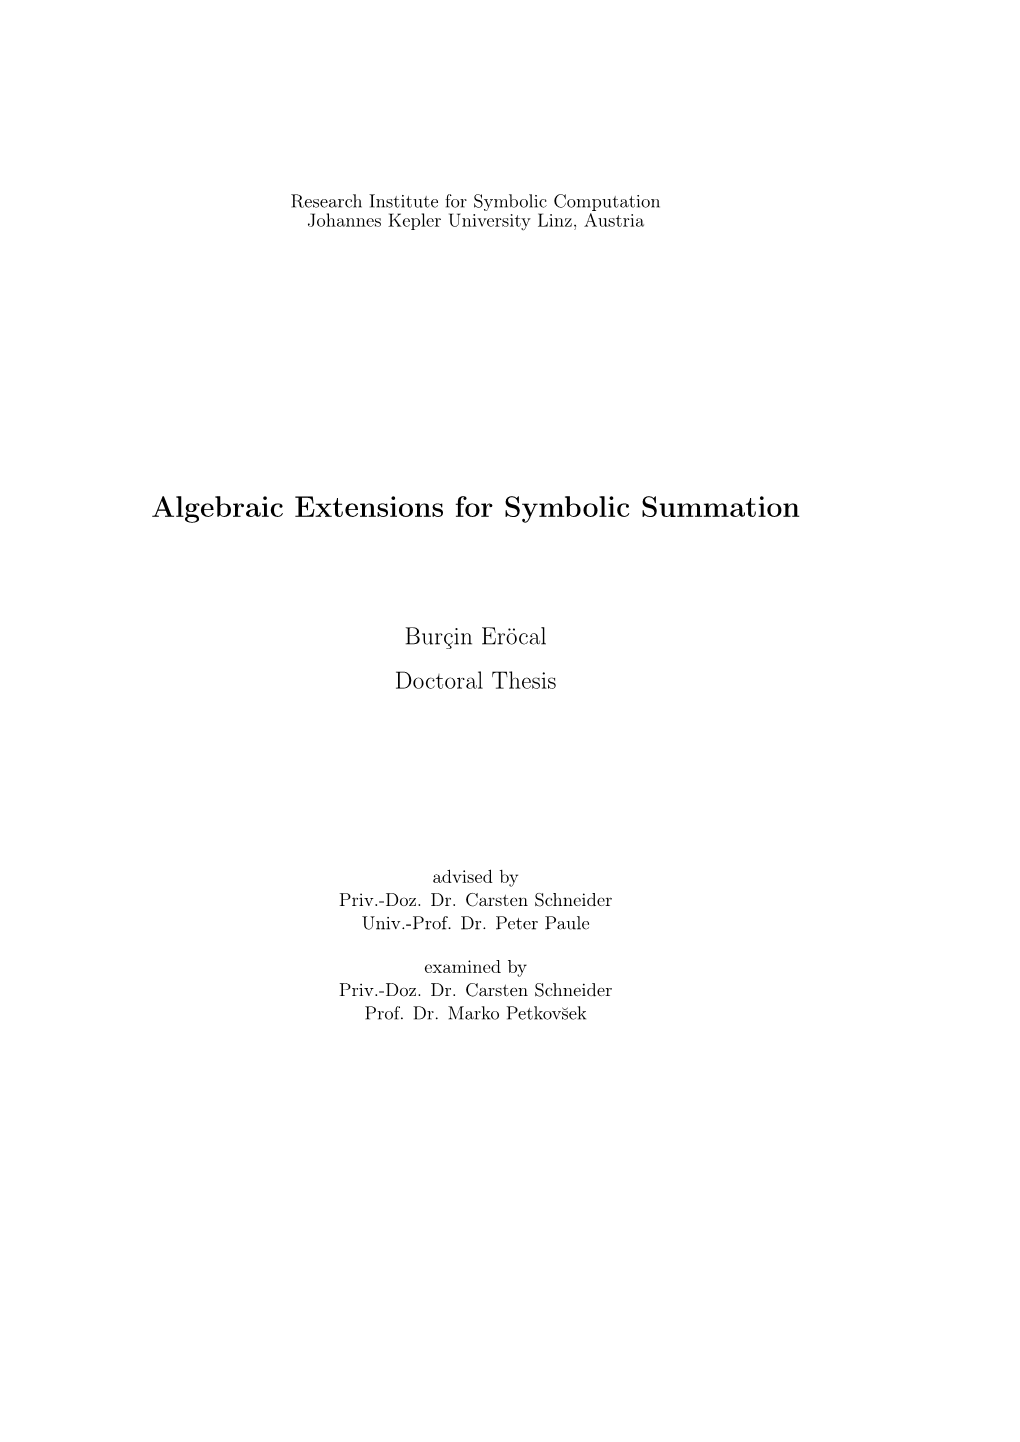 Algebraic Extensions for Symbolic Summation